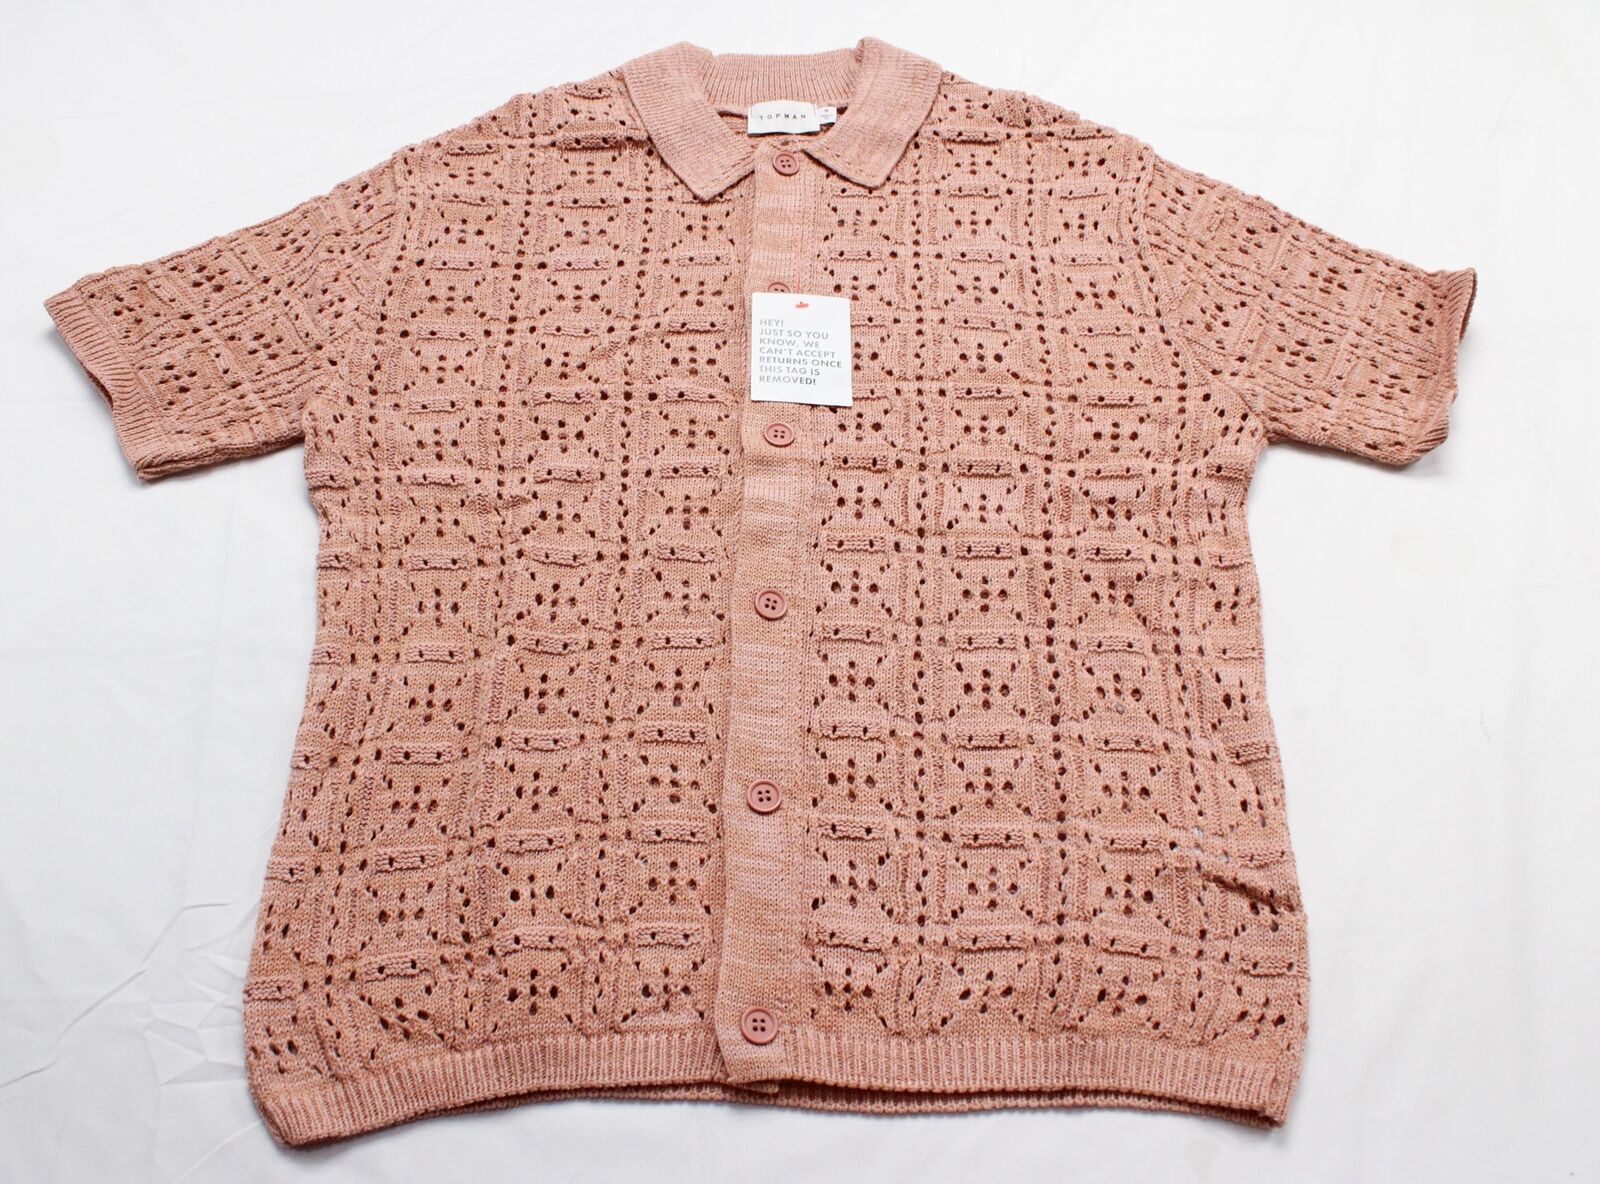 Topman Men's Knitted Pointelle Button Through Shirt DP3 Pink Medium NWT